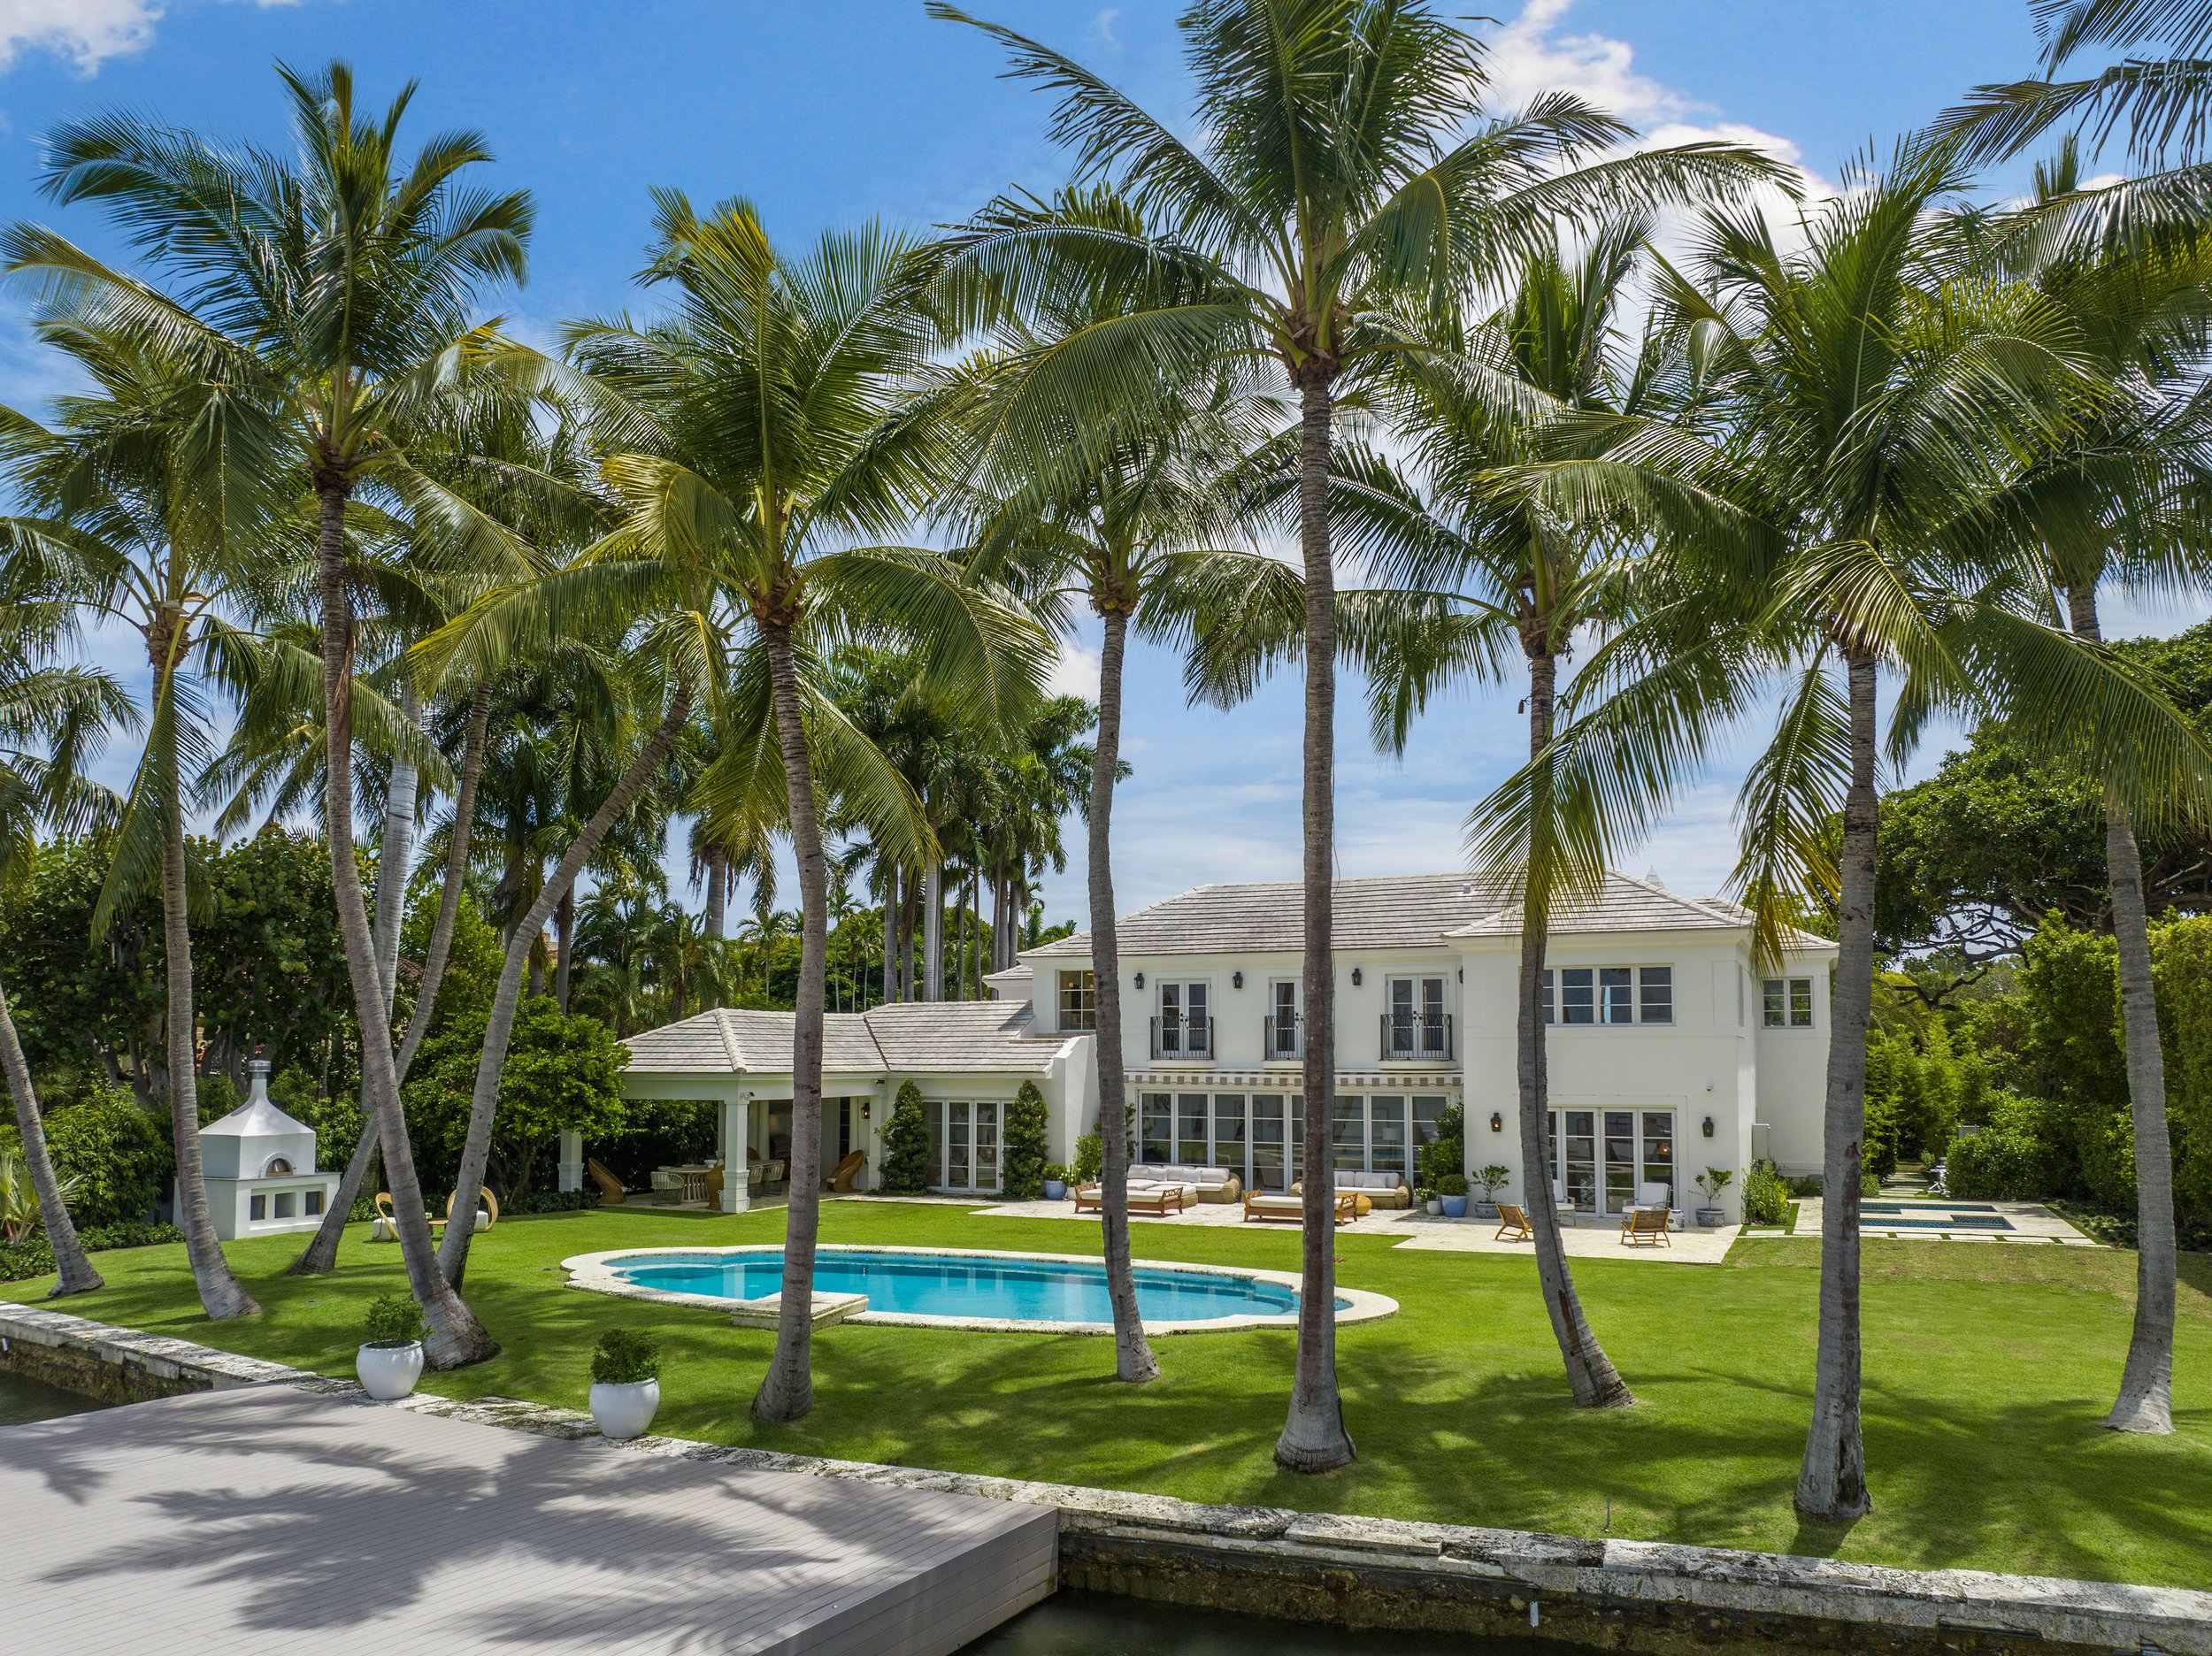 Tory Burch Co-Founder Lists Lavish Miami Beach Estate For $49 Million 2.jpg